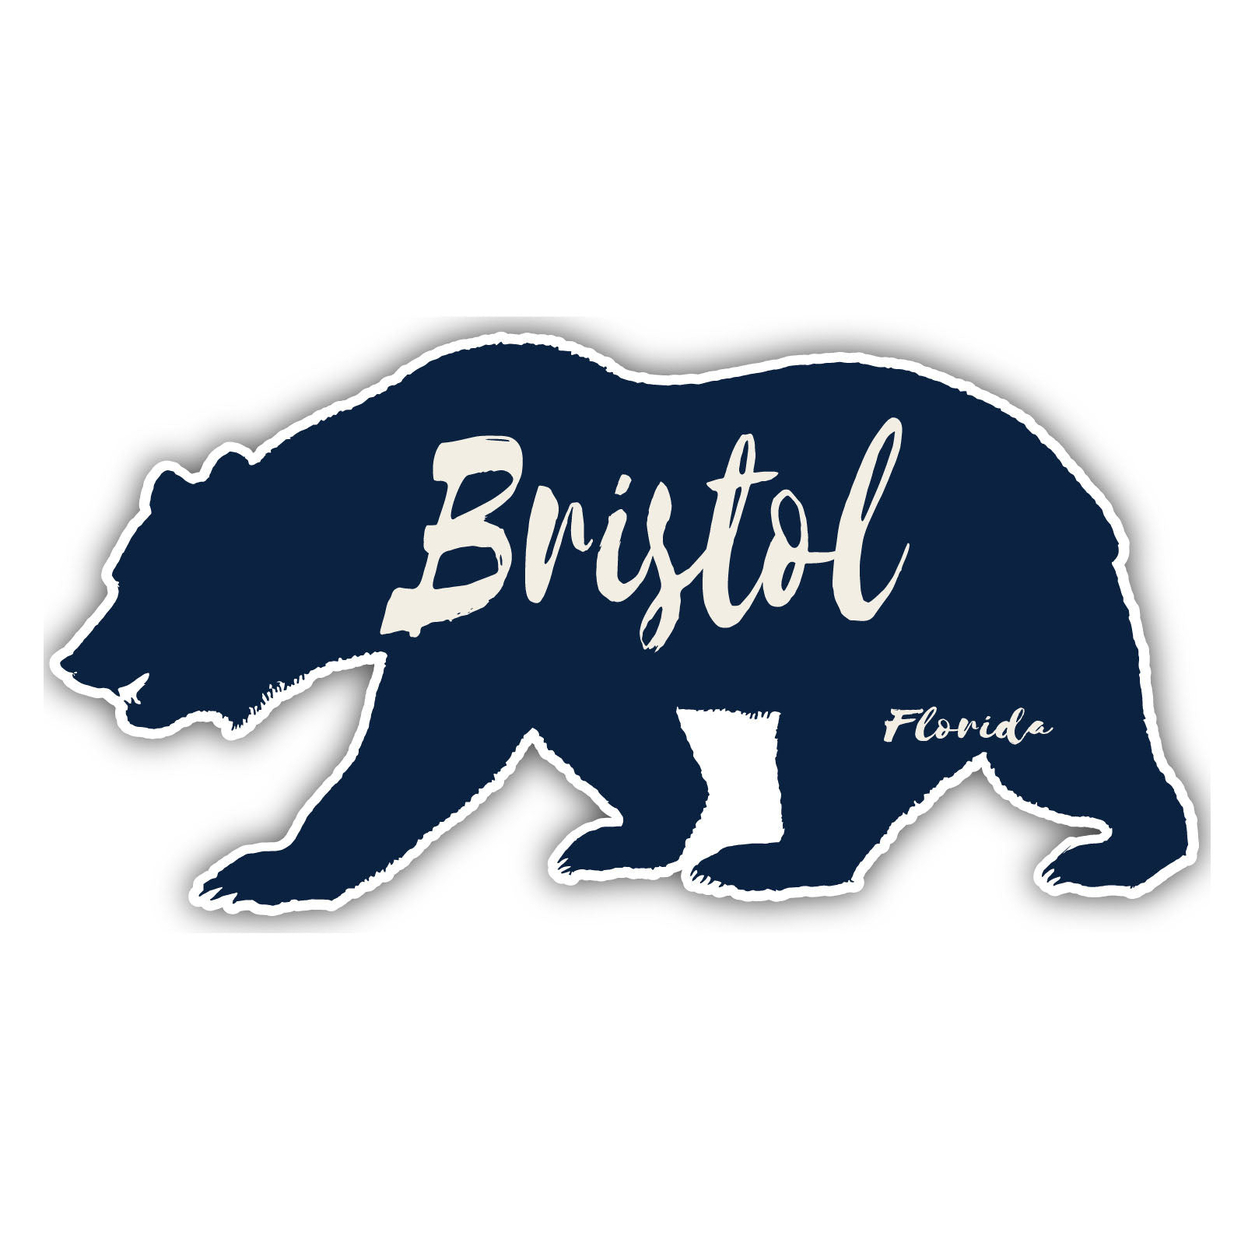 Bristol Florida Souvenir Decorative Stickers (Choose Theme And Size) - Single Unit, 12-Inch, Bear